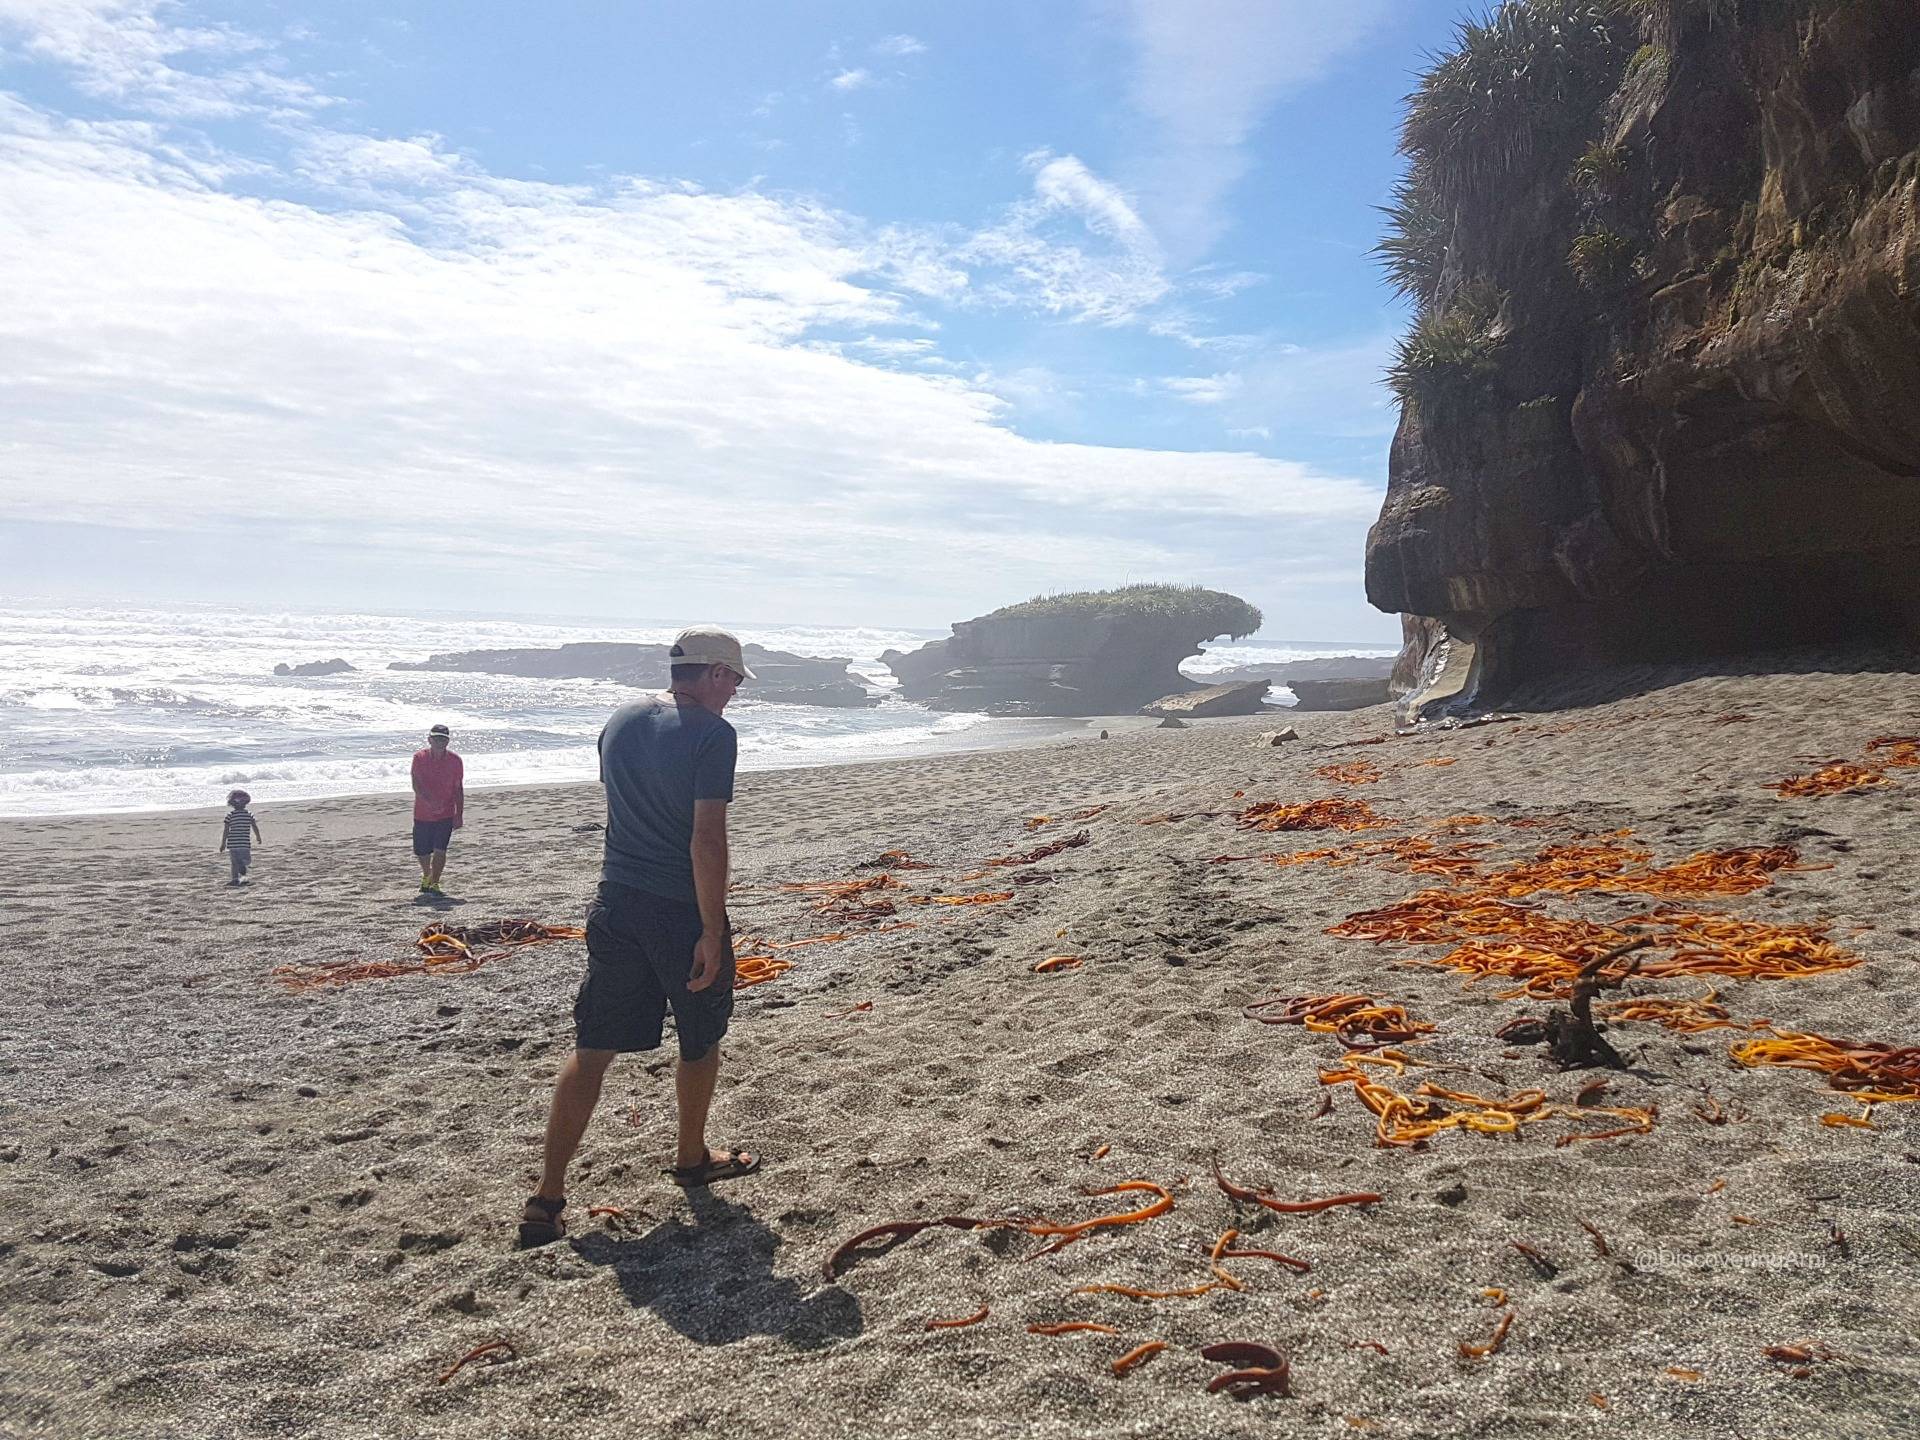 Bull kelp and seaweeds along the gravel shores